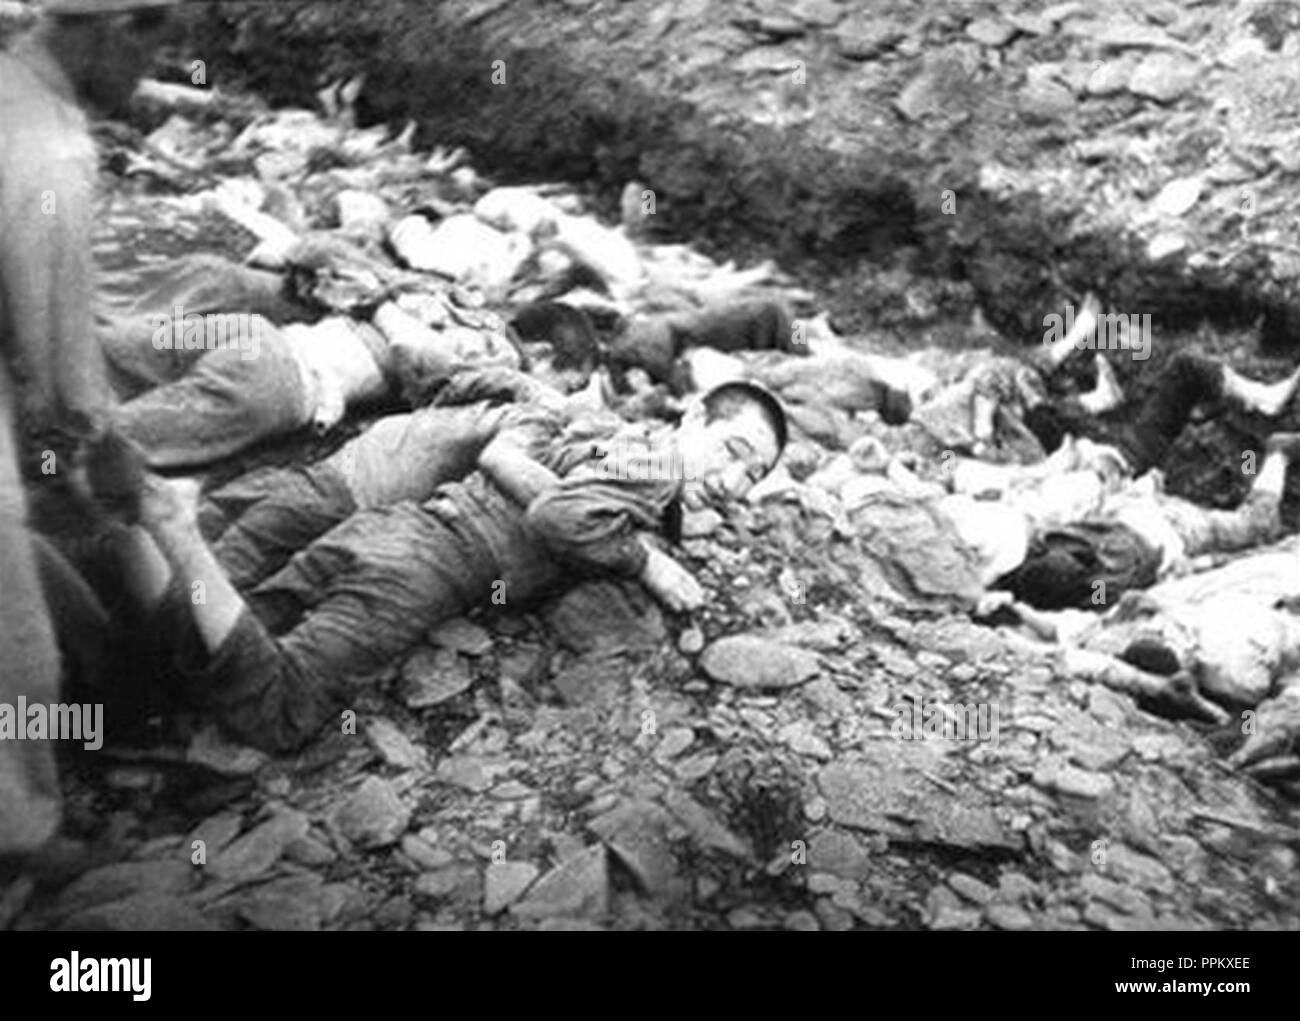 Bodo League Massacre at Daejon South Korea 1950. Stock Photo